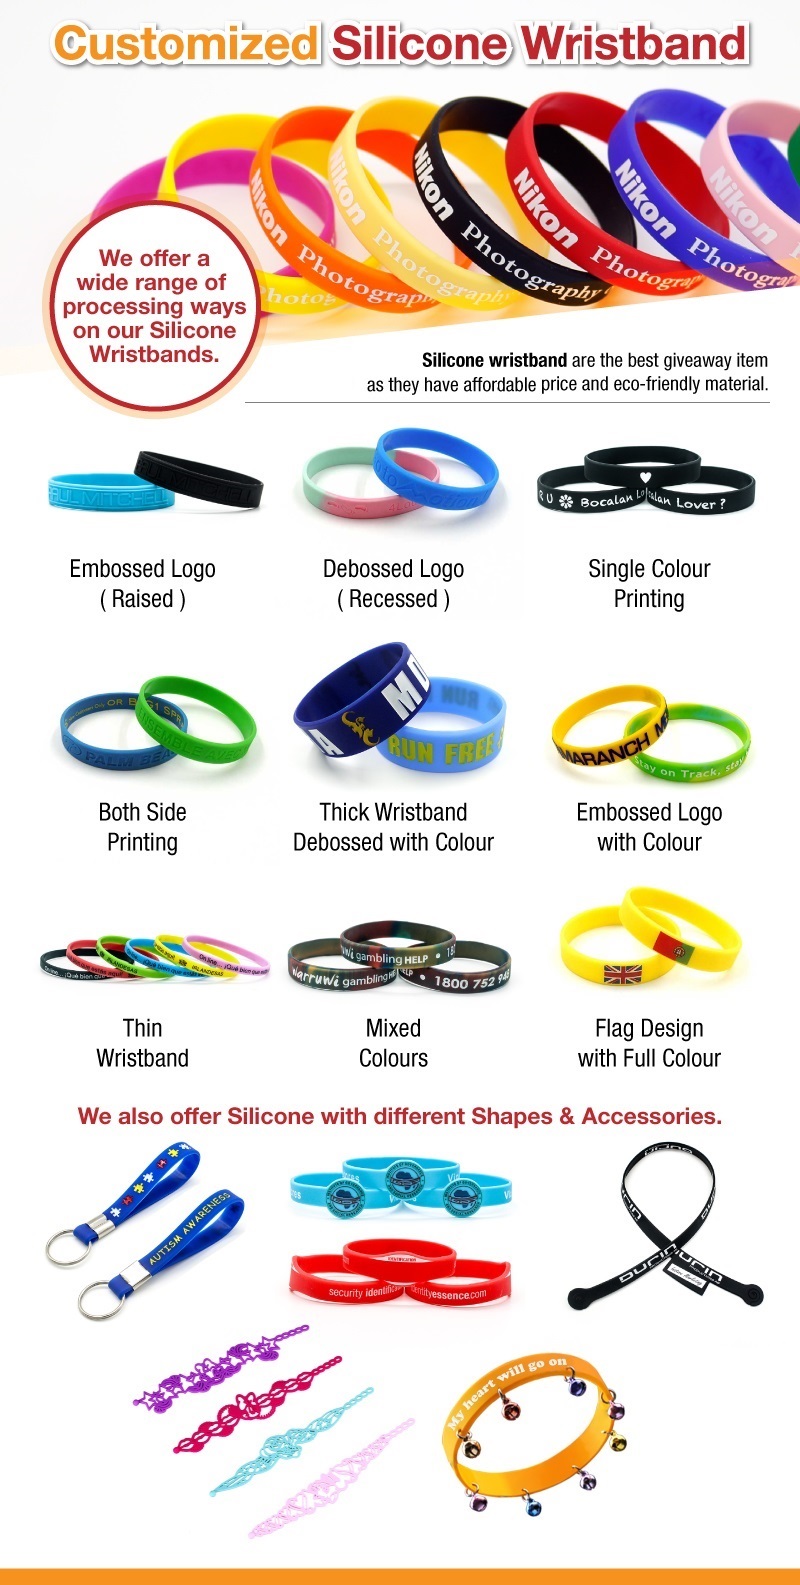 Customized Silicone Wristbands